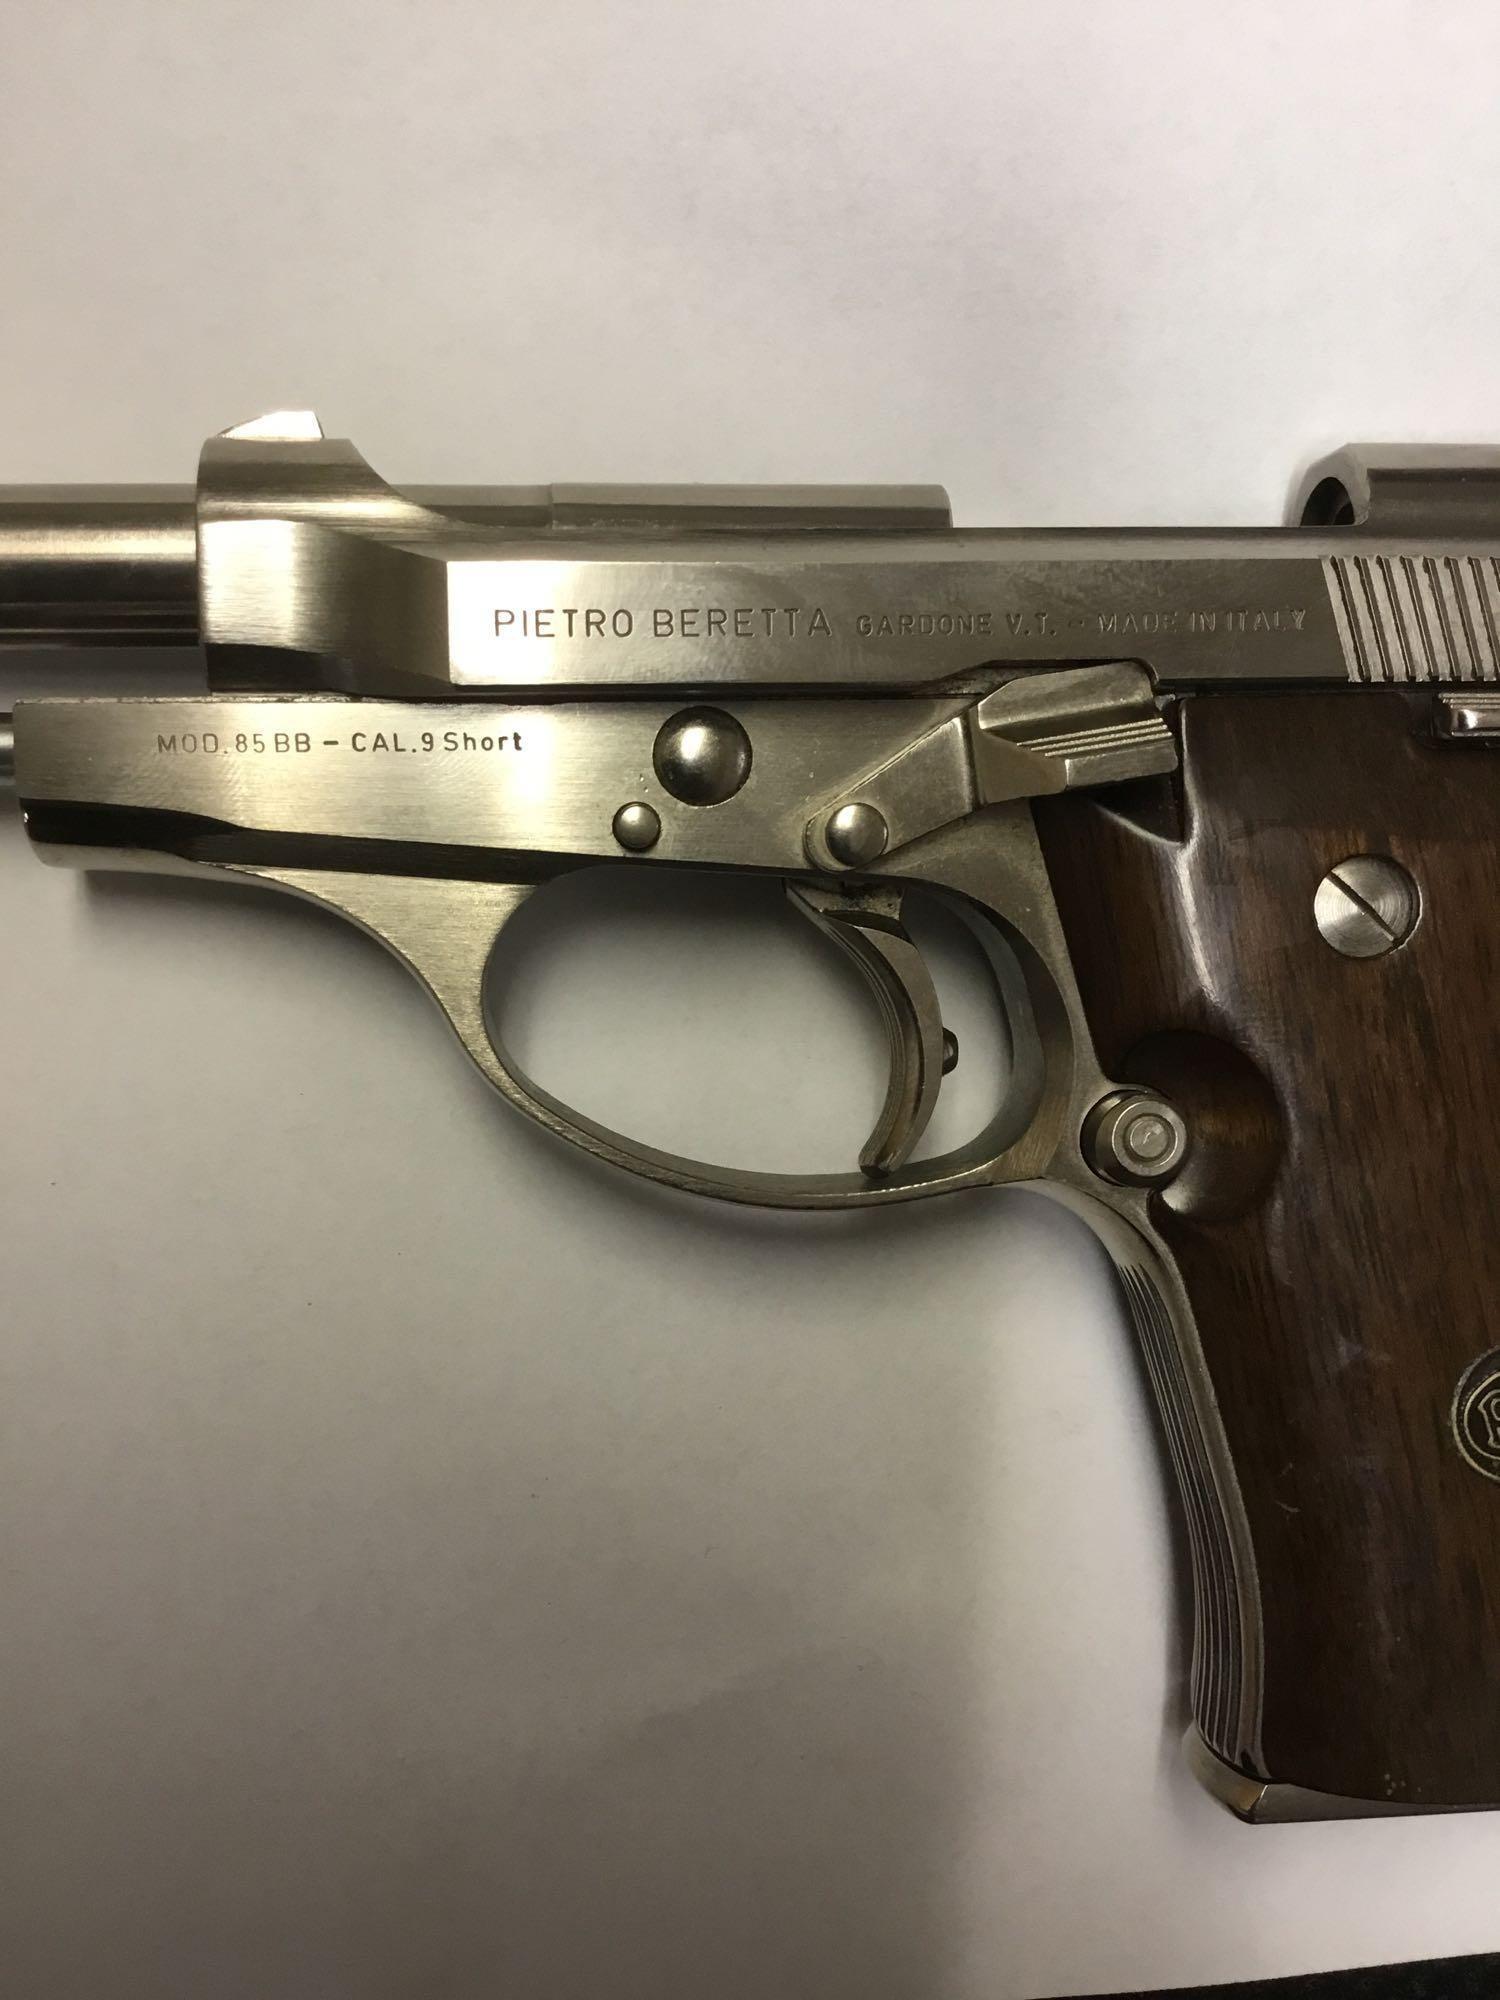 Pietro Beretta 9mm pistol with clip